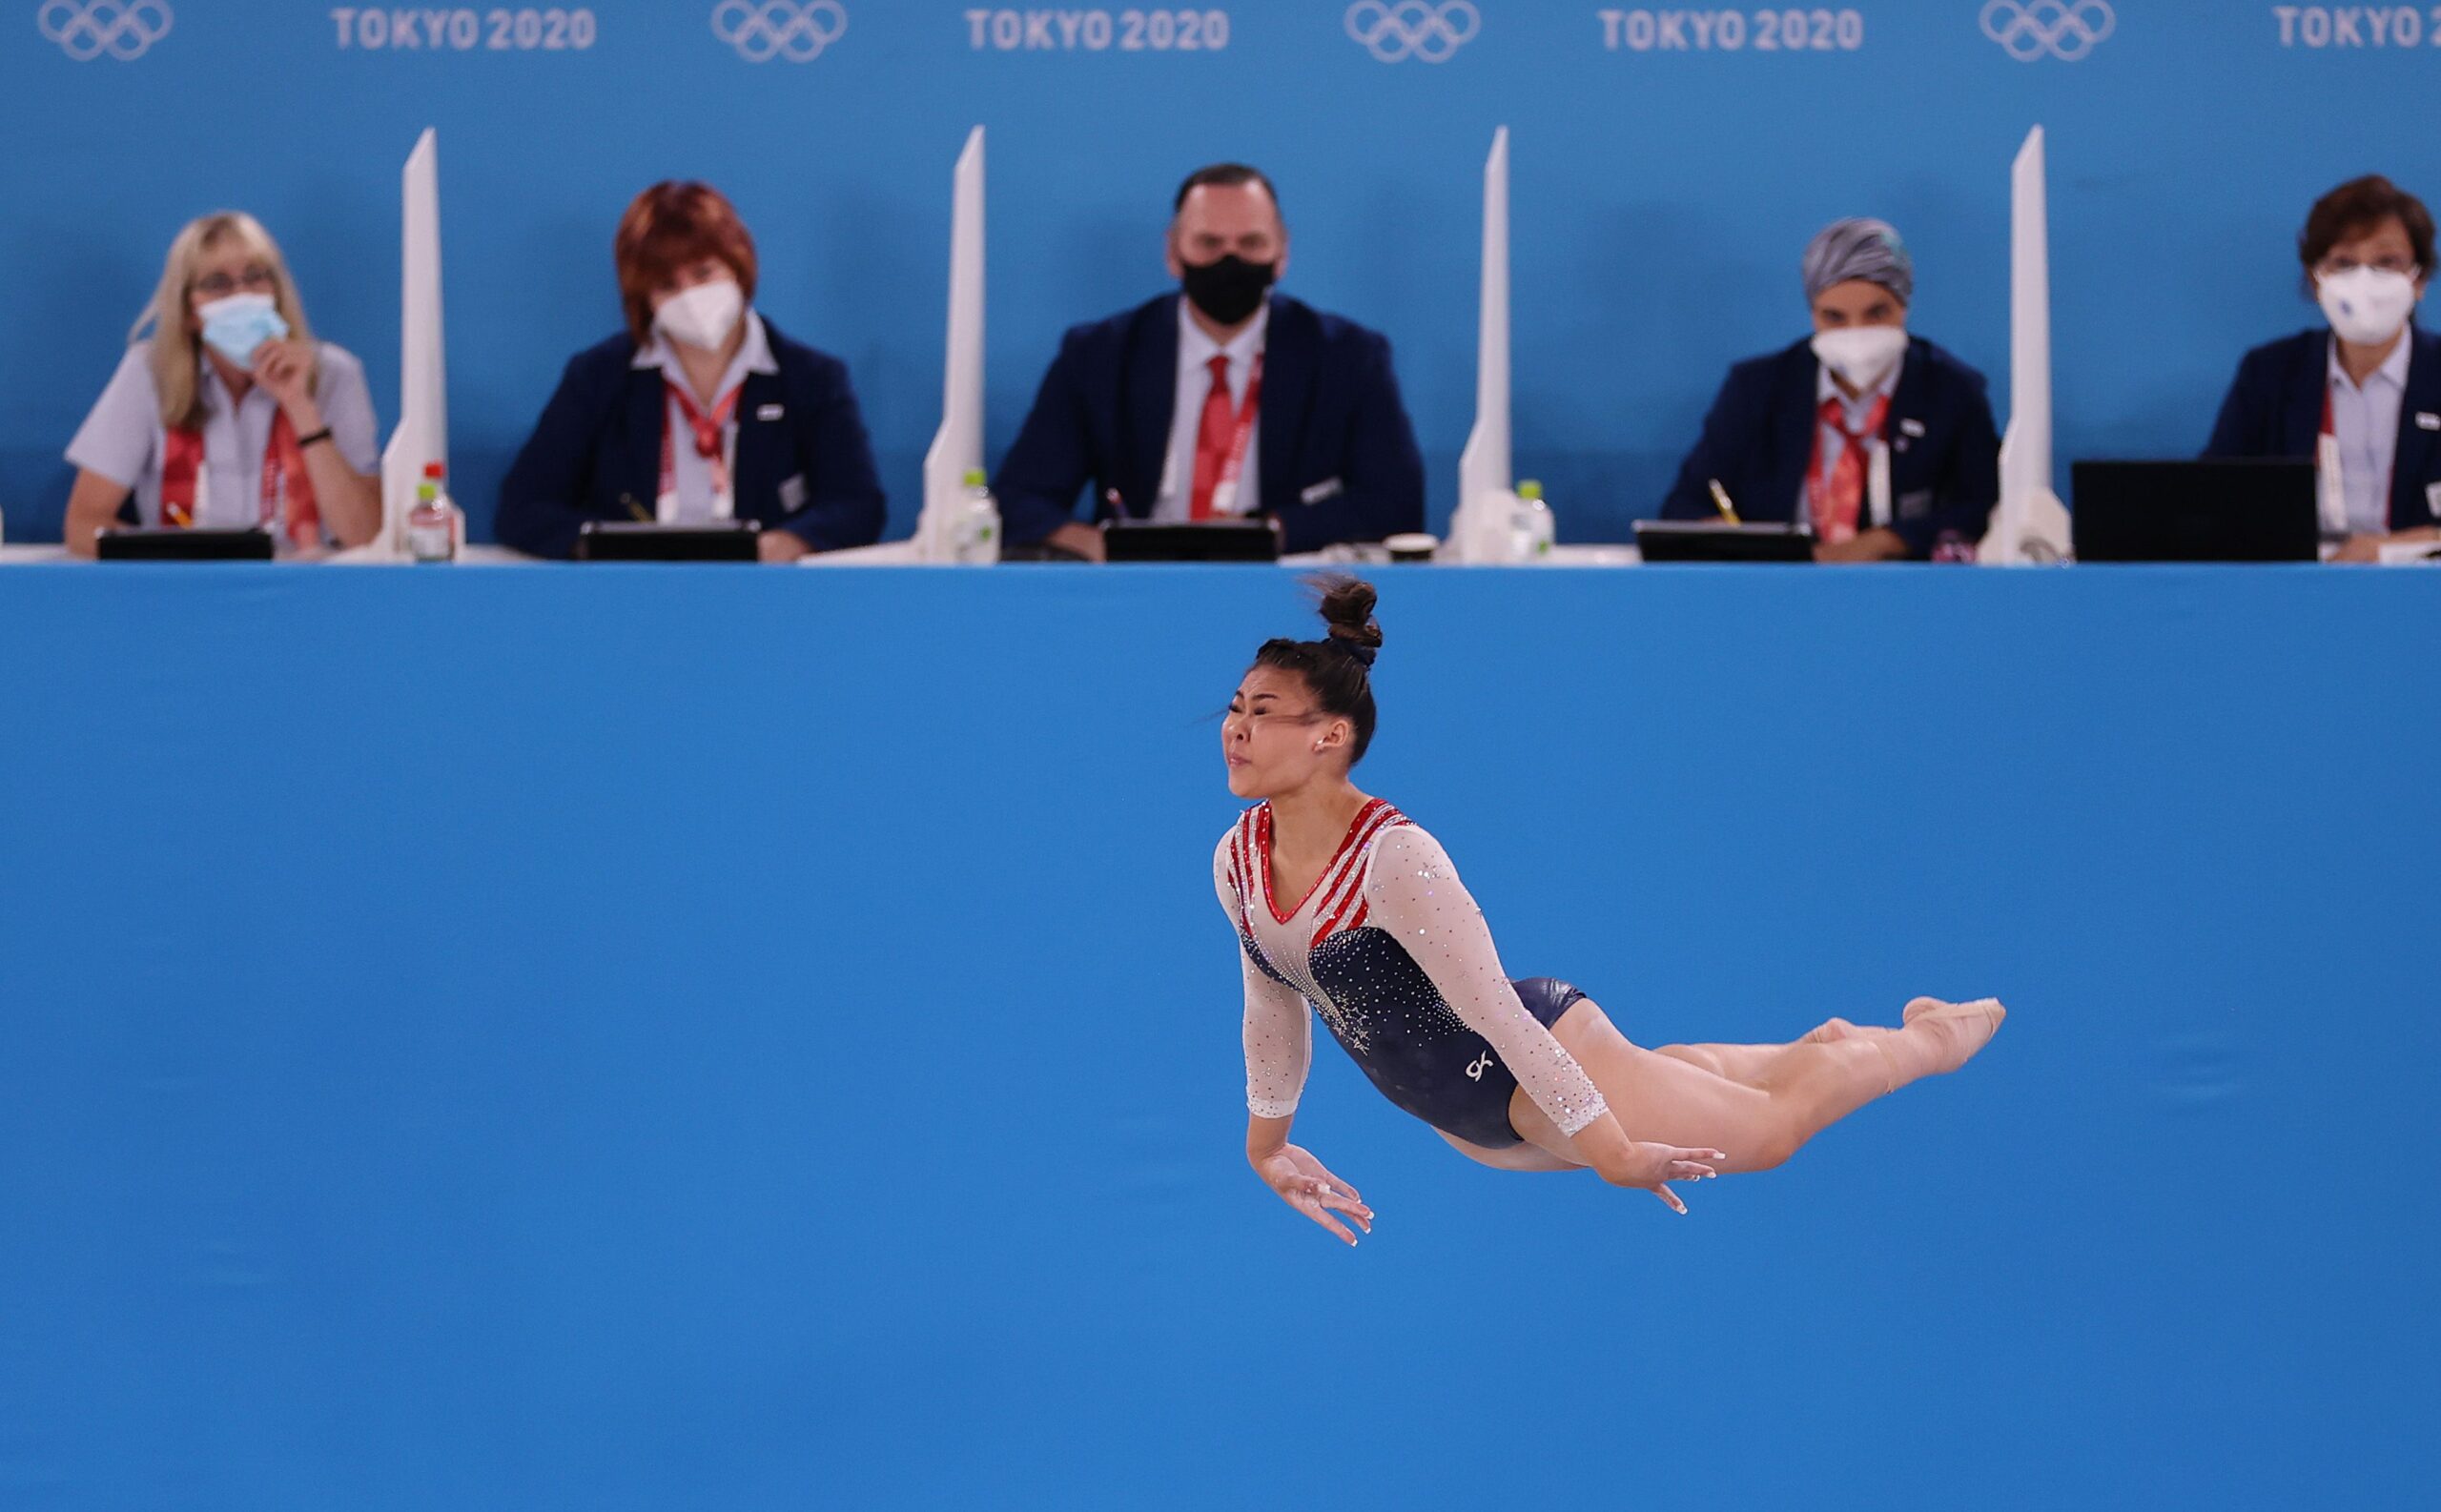 Team USA's Sunisa Lee Wins Gold In The Women's Gymnastics All-Around Final  : Live Updates: The Tokyo Olympics : NPR